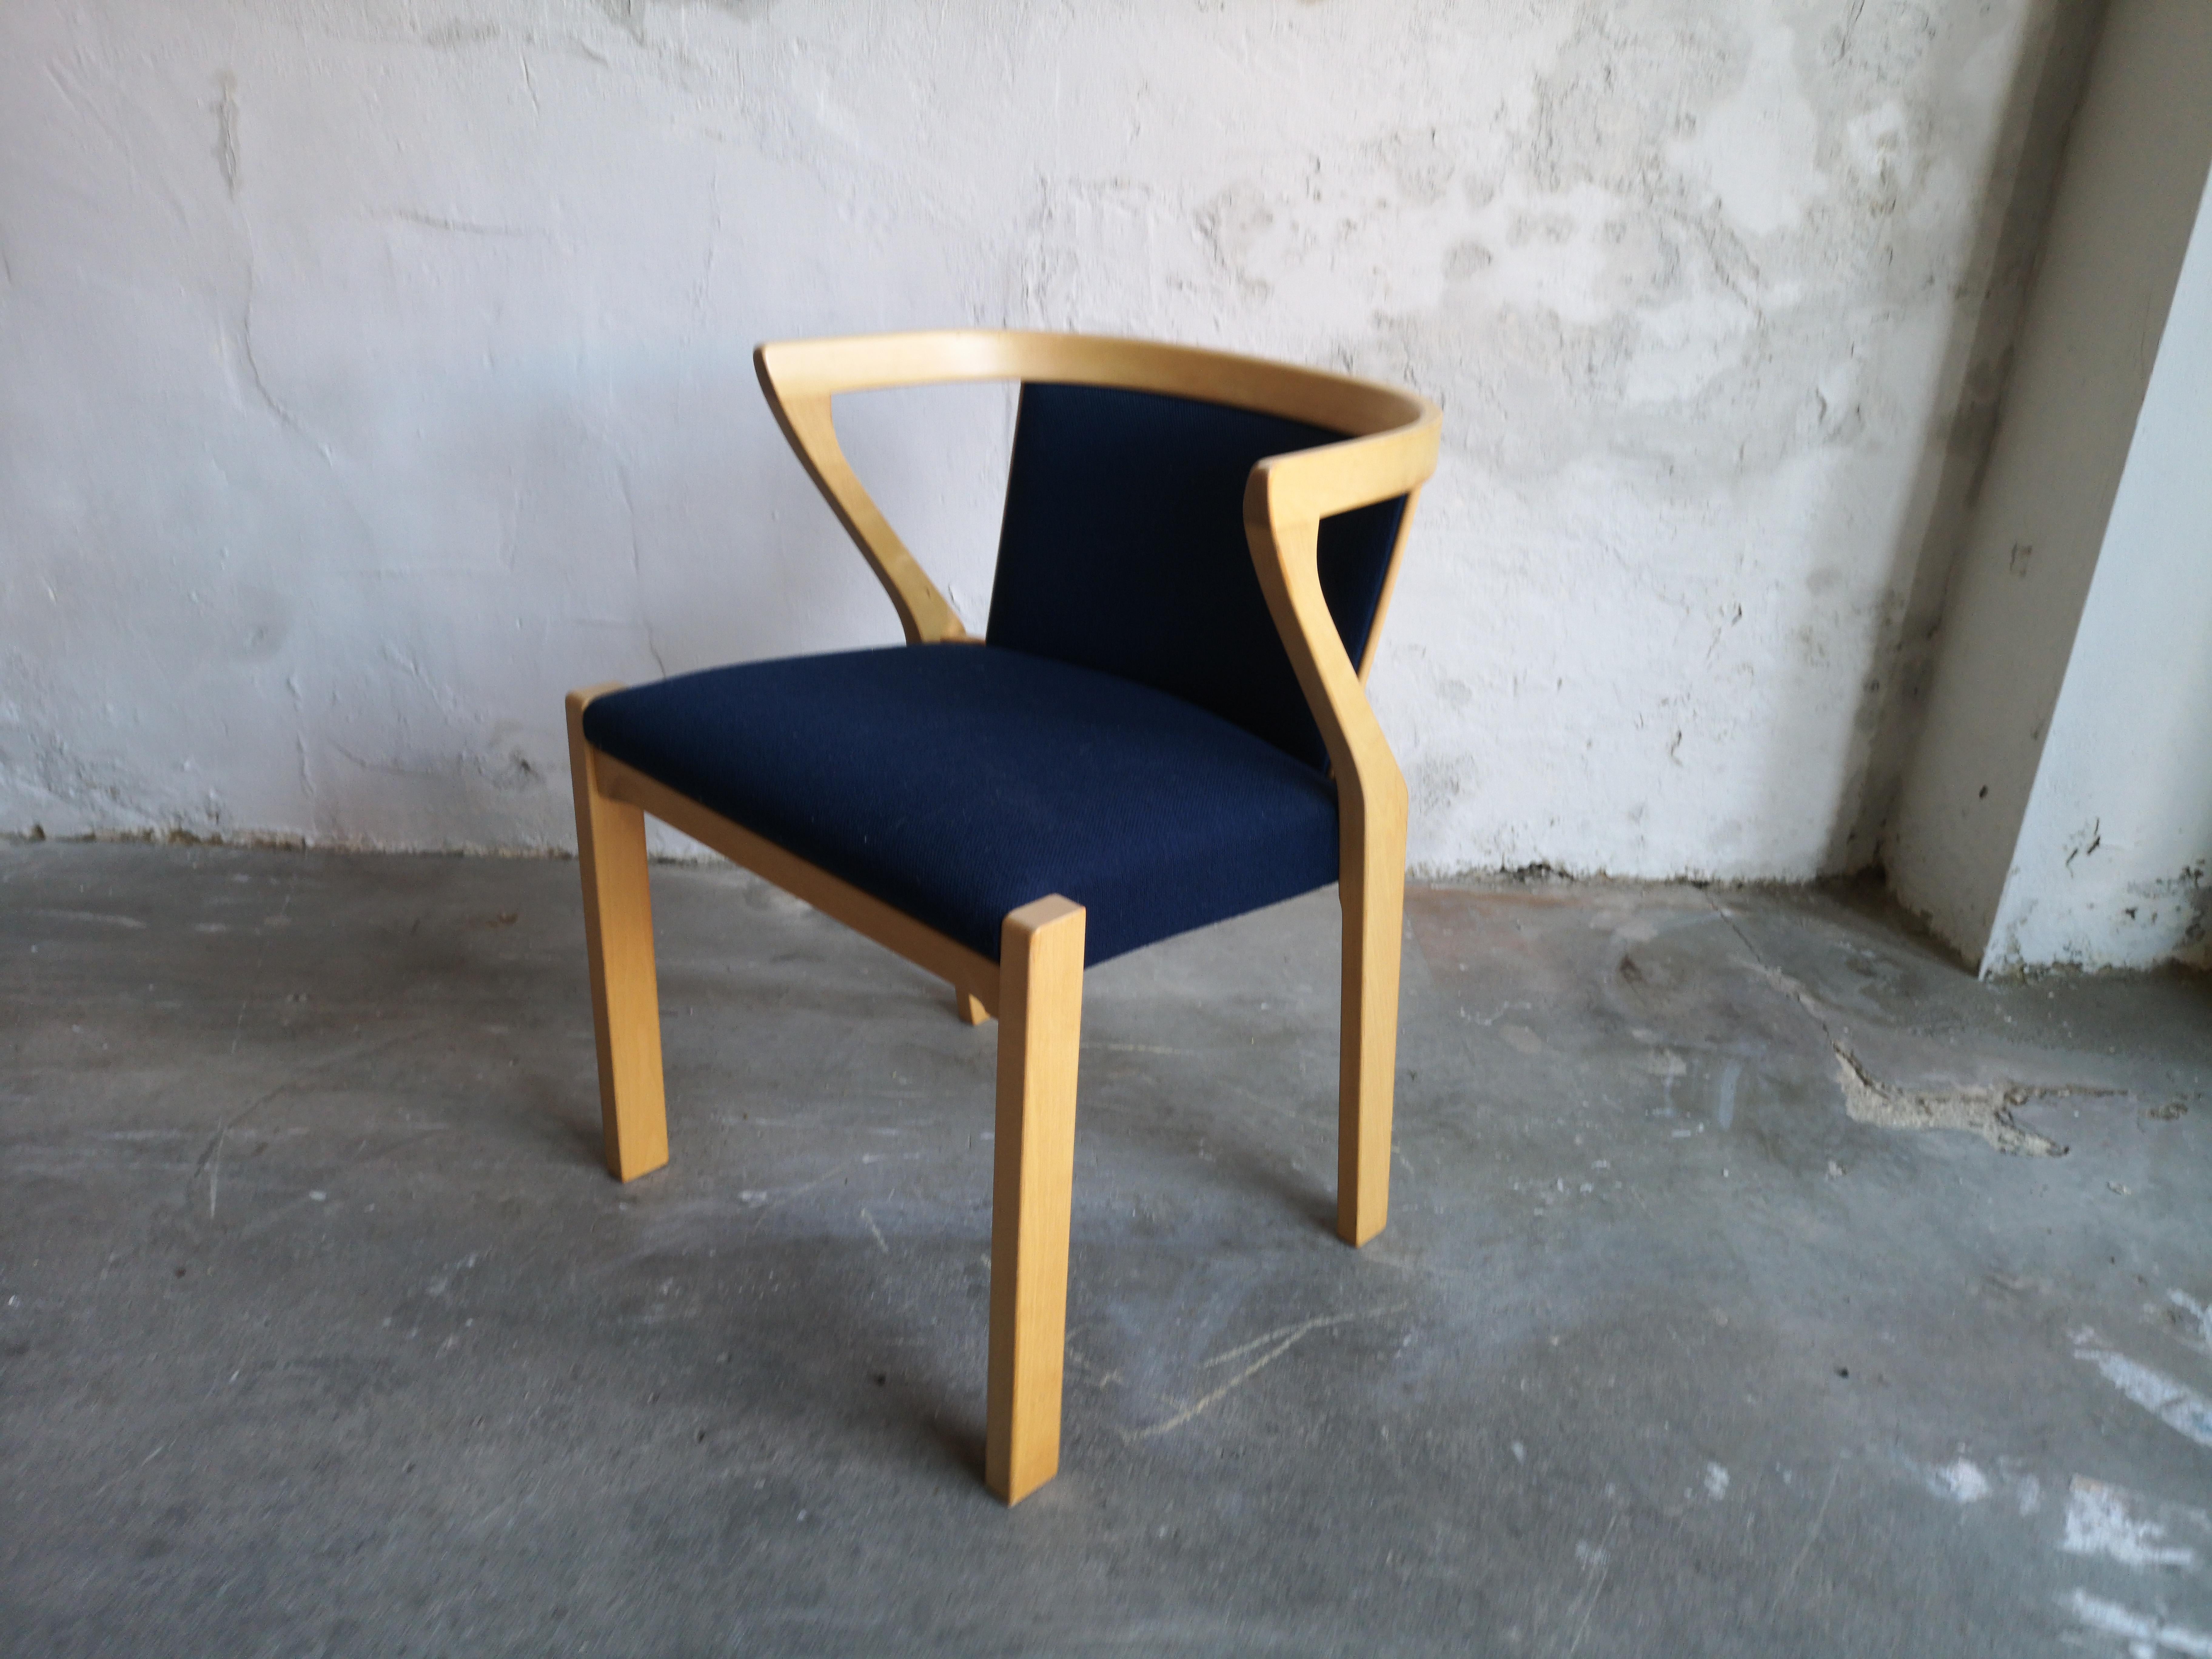 This lovely genuine Artek chair No. 2 